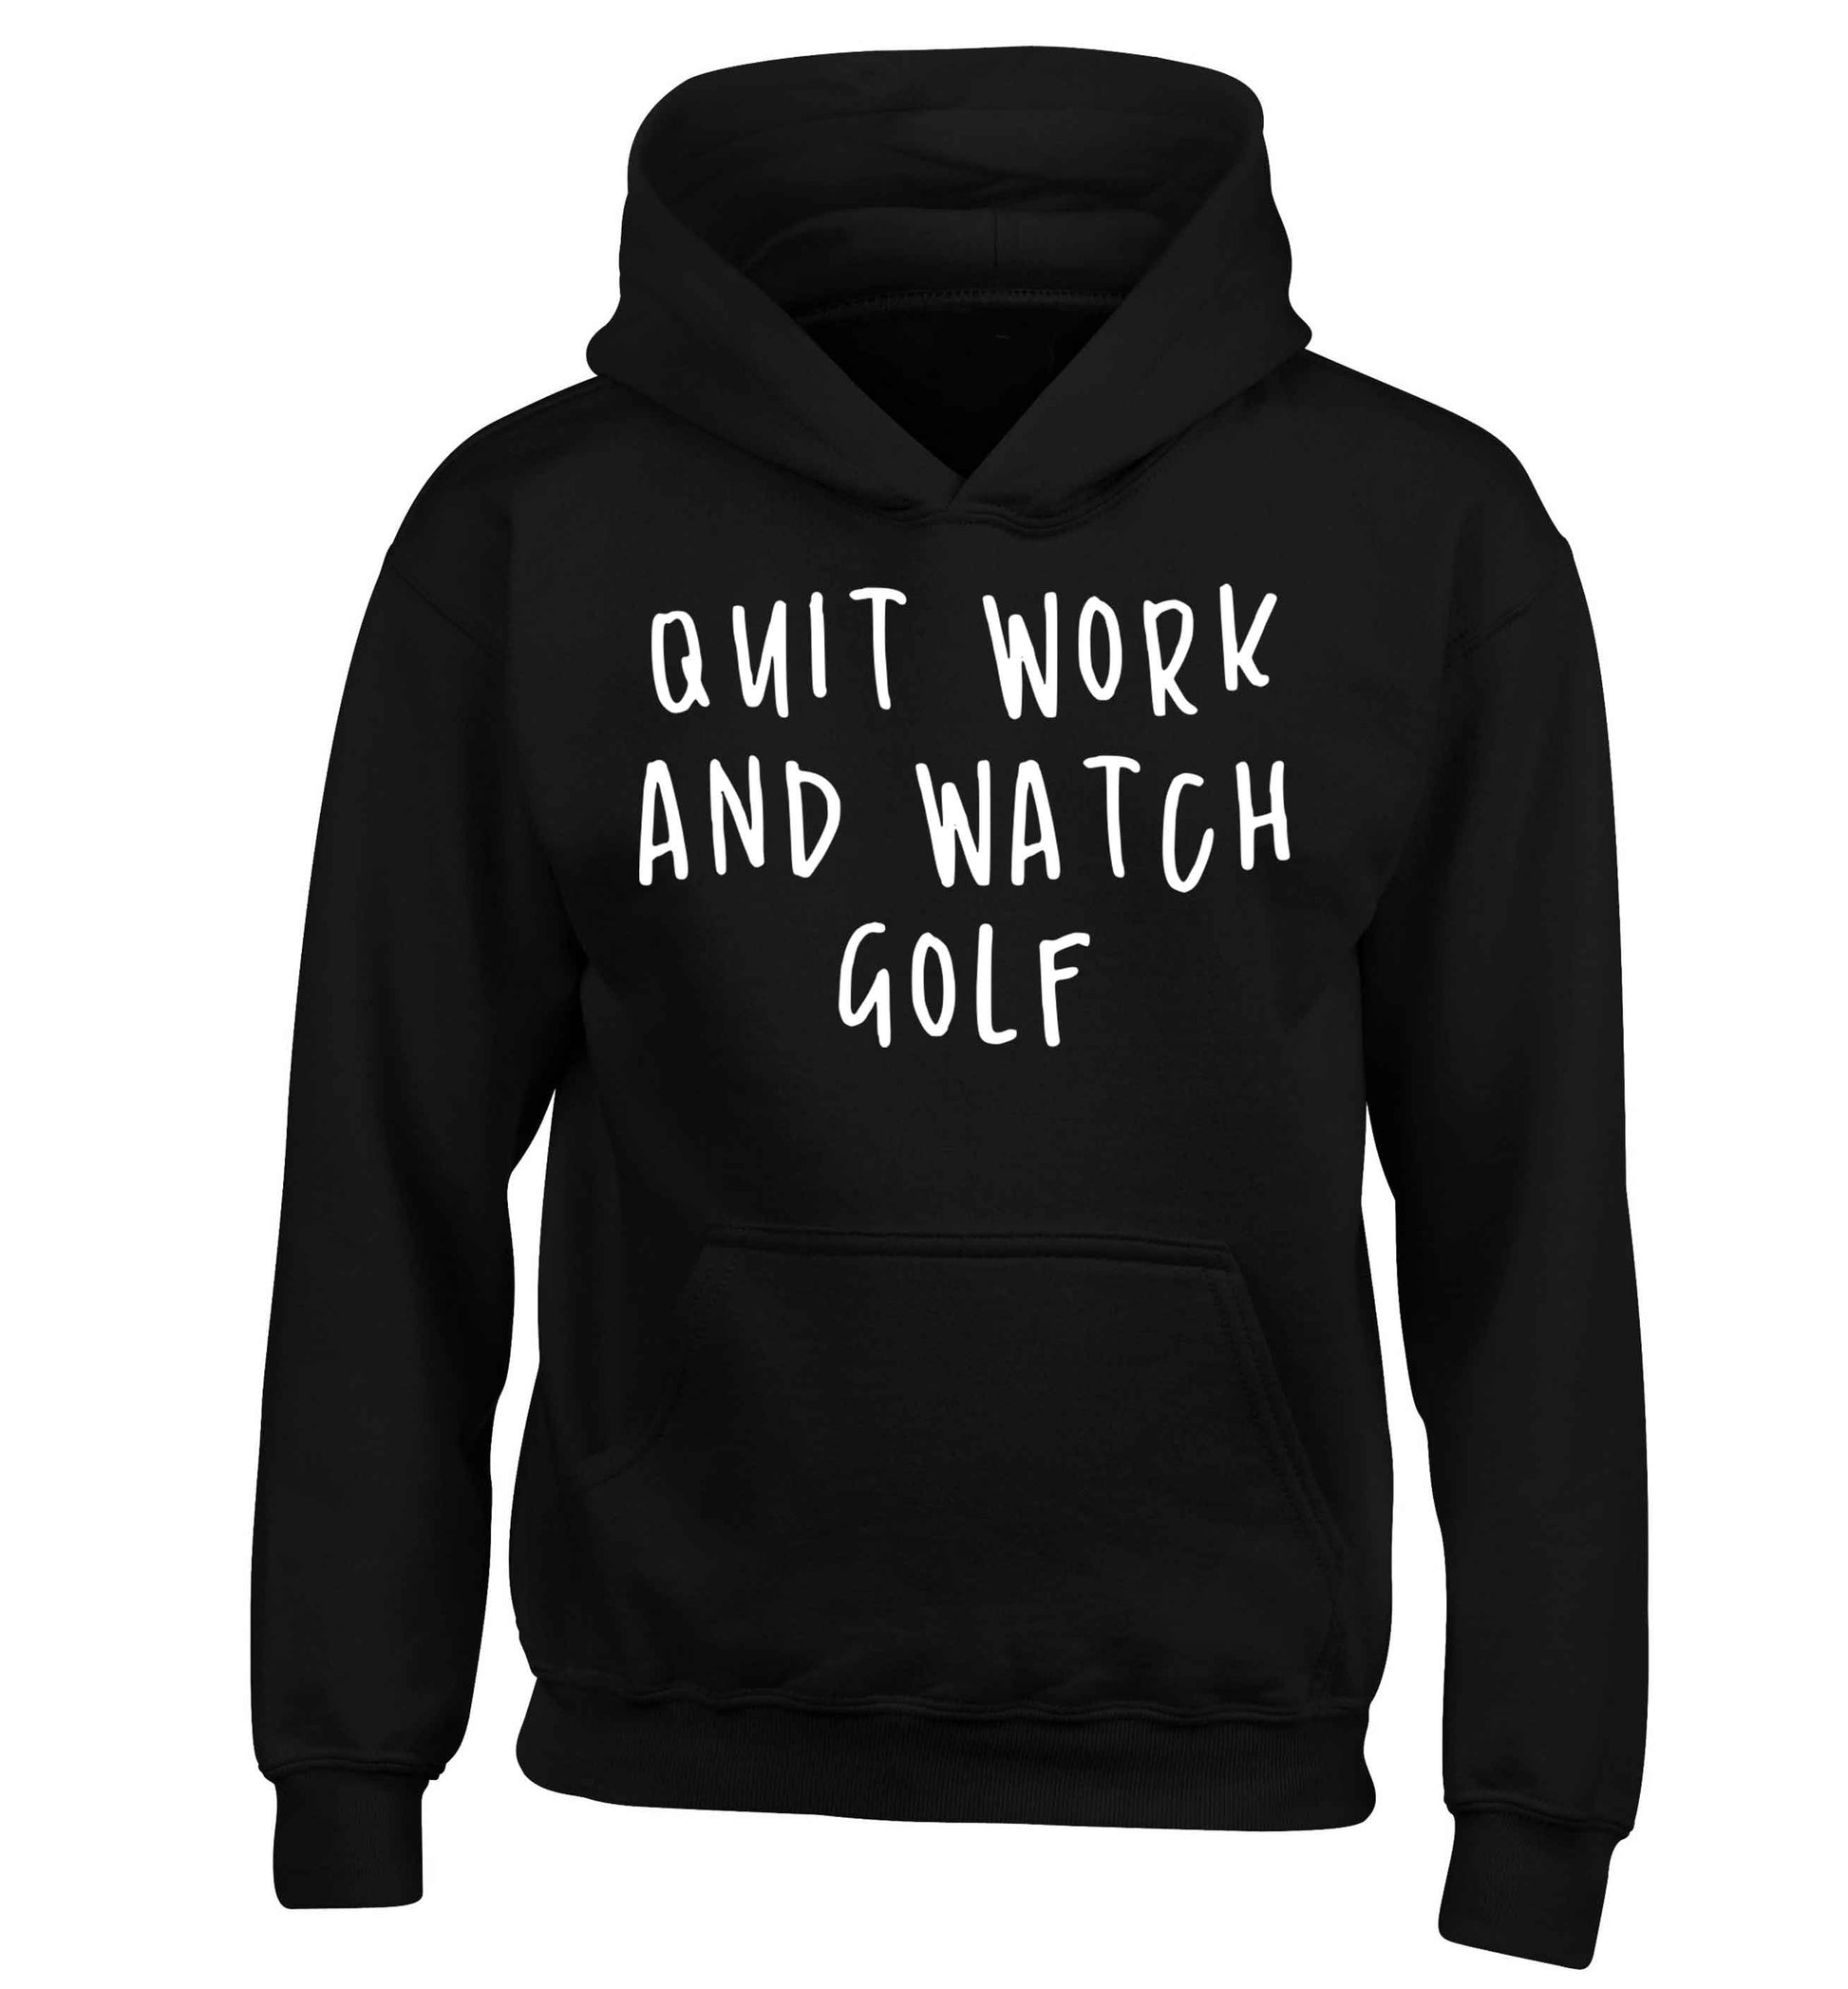 Quit work and watch golf children's black hoodie 12-13 Years